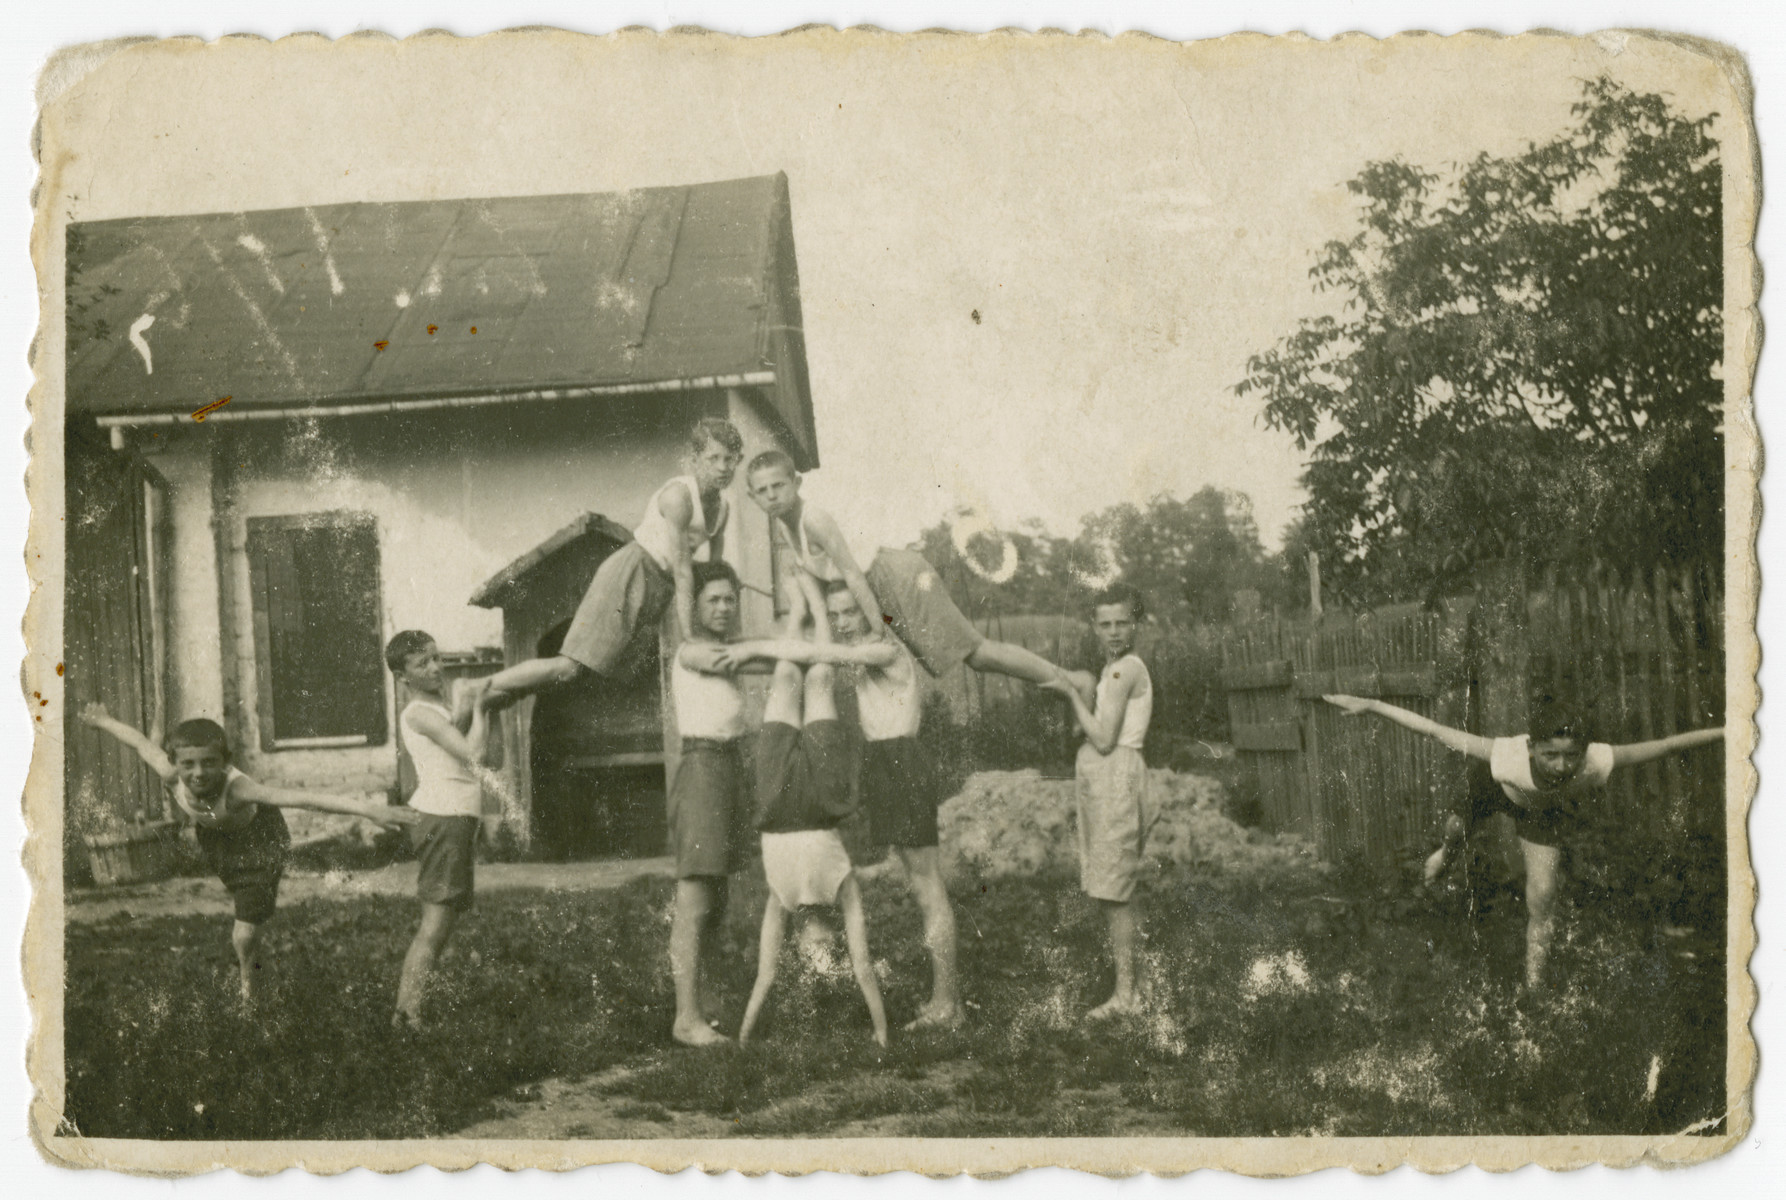 Teenage boys from a Maccabi club practice gymnastics.